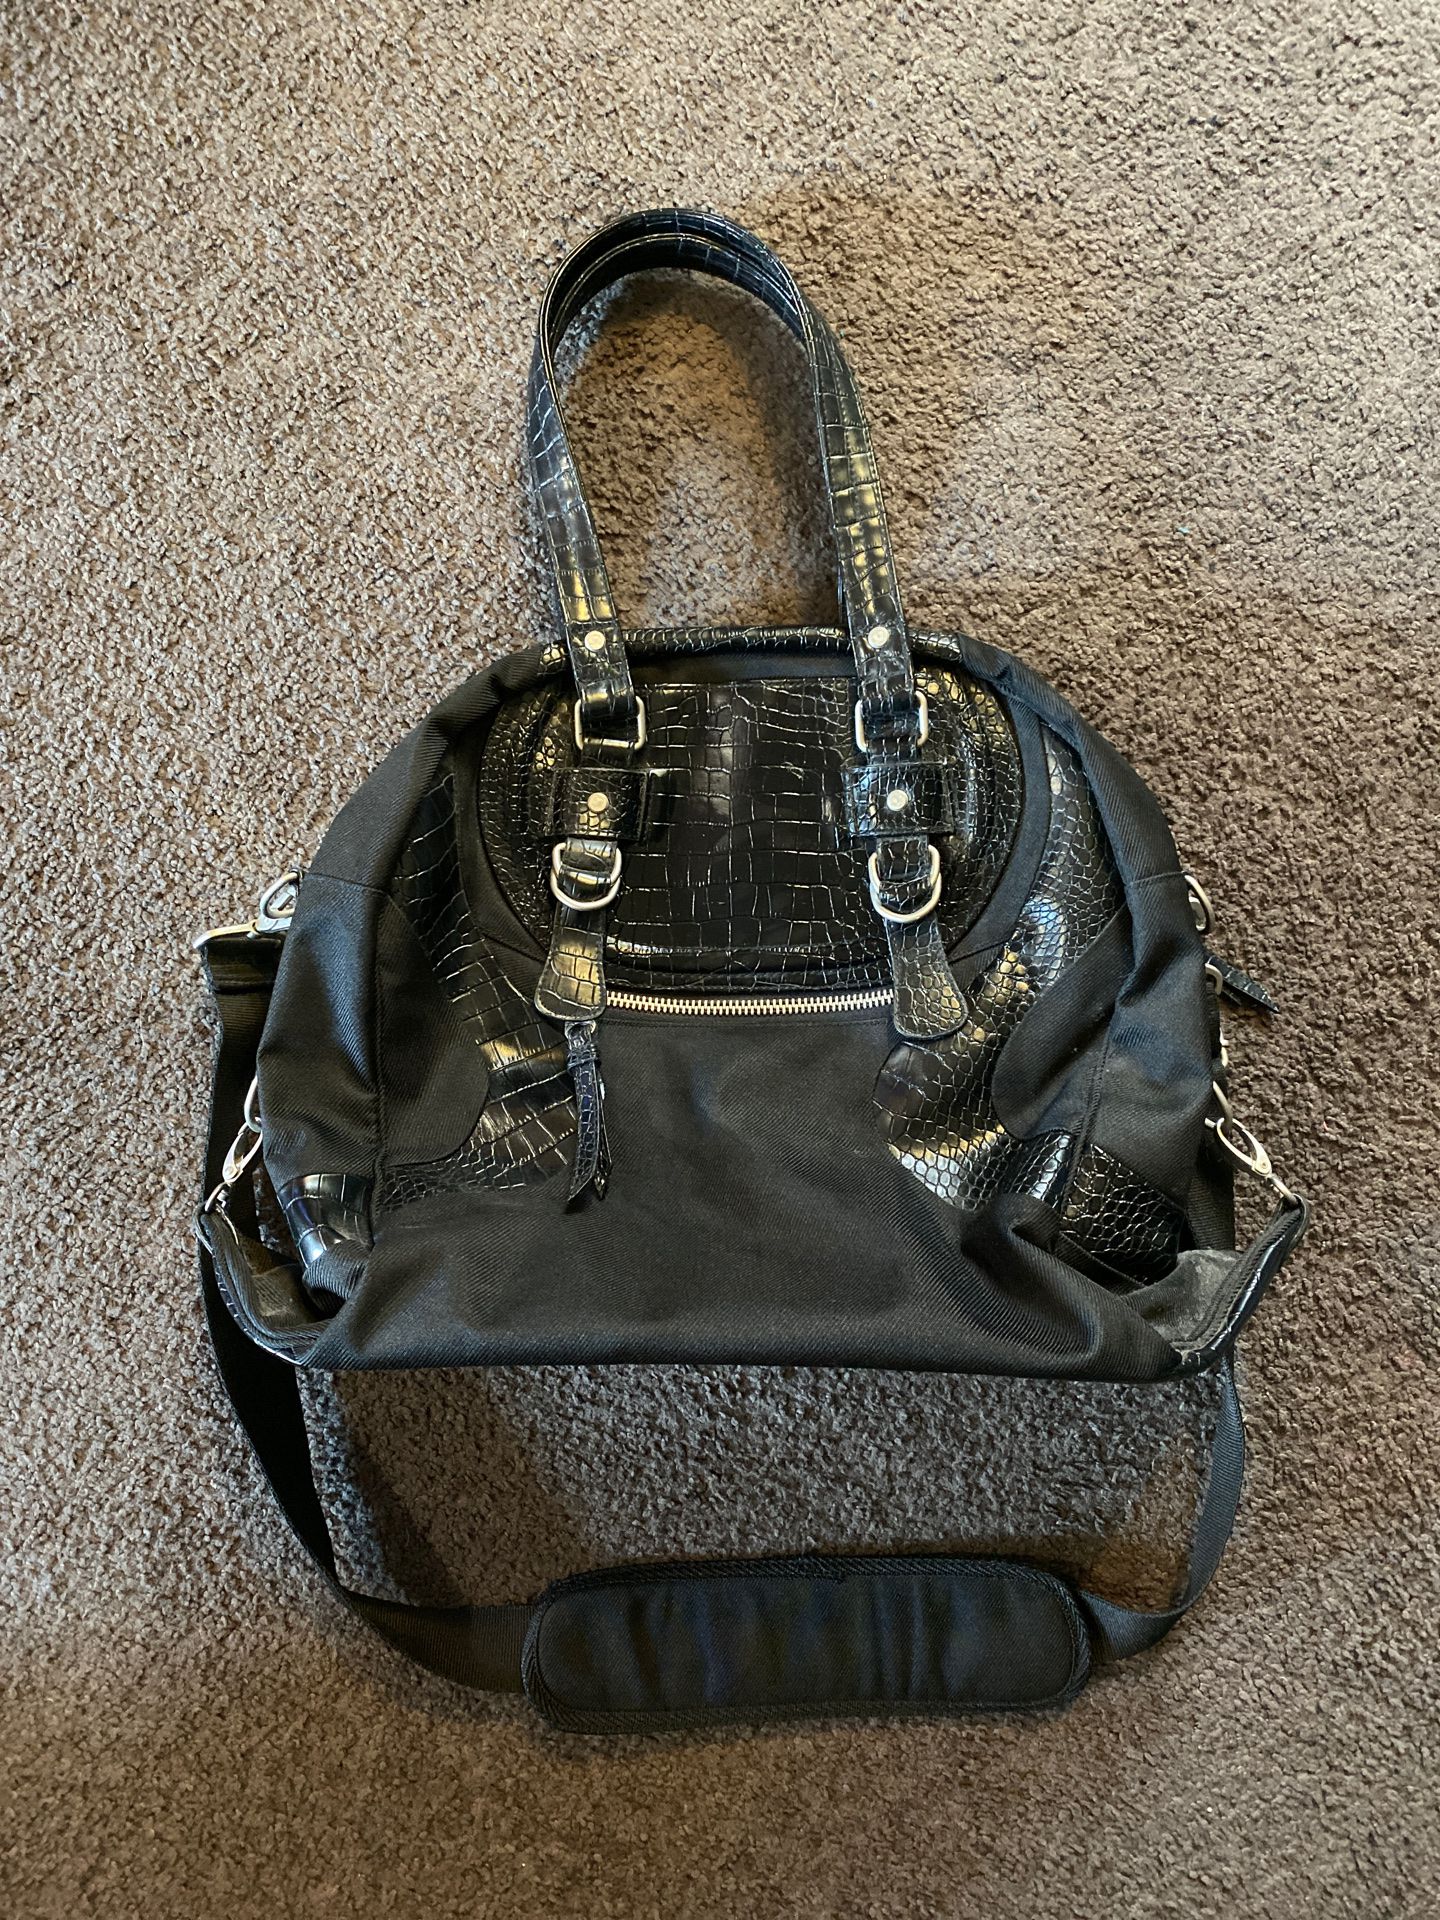 Lululemon bag + 13 other items for Ashley